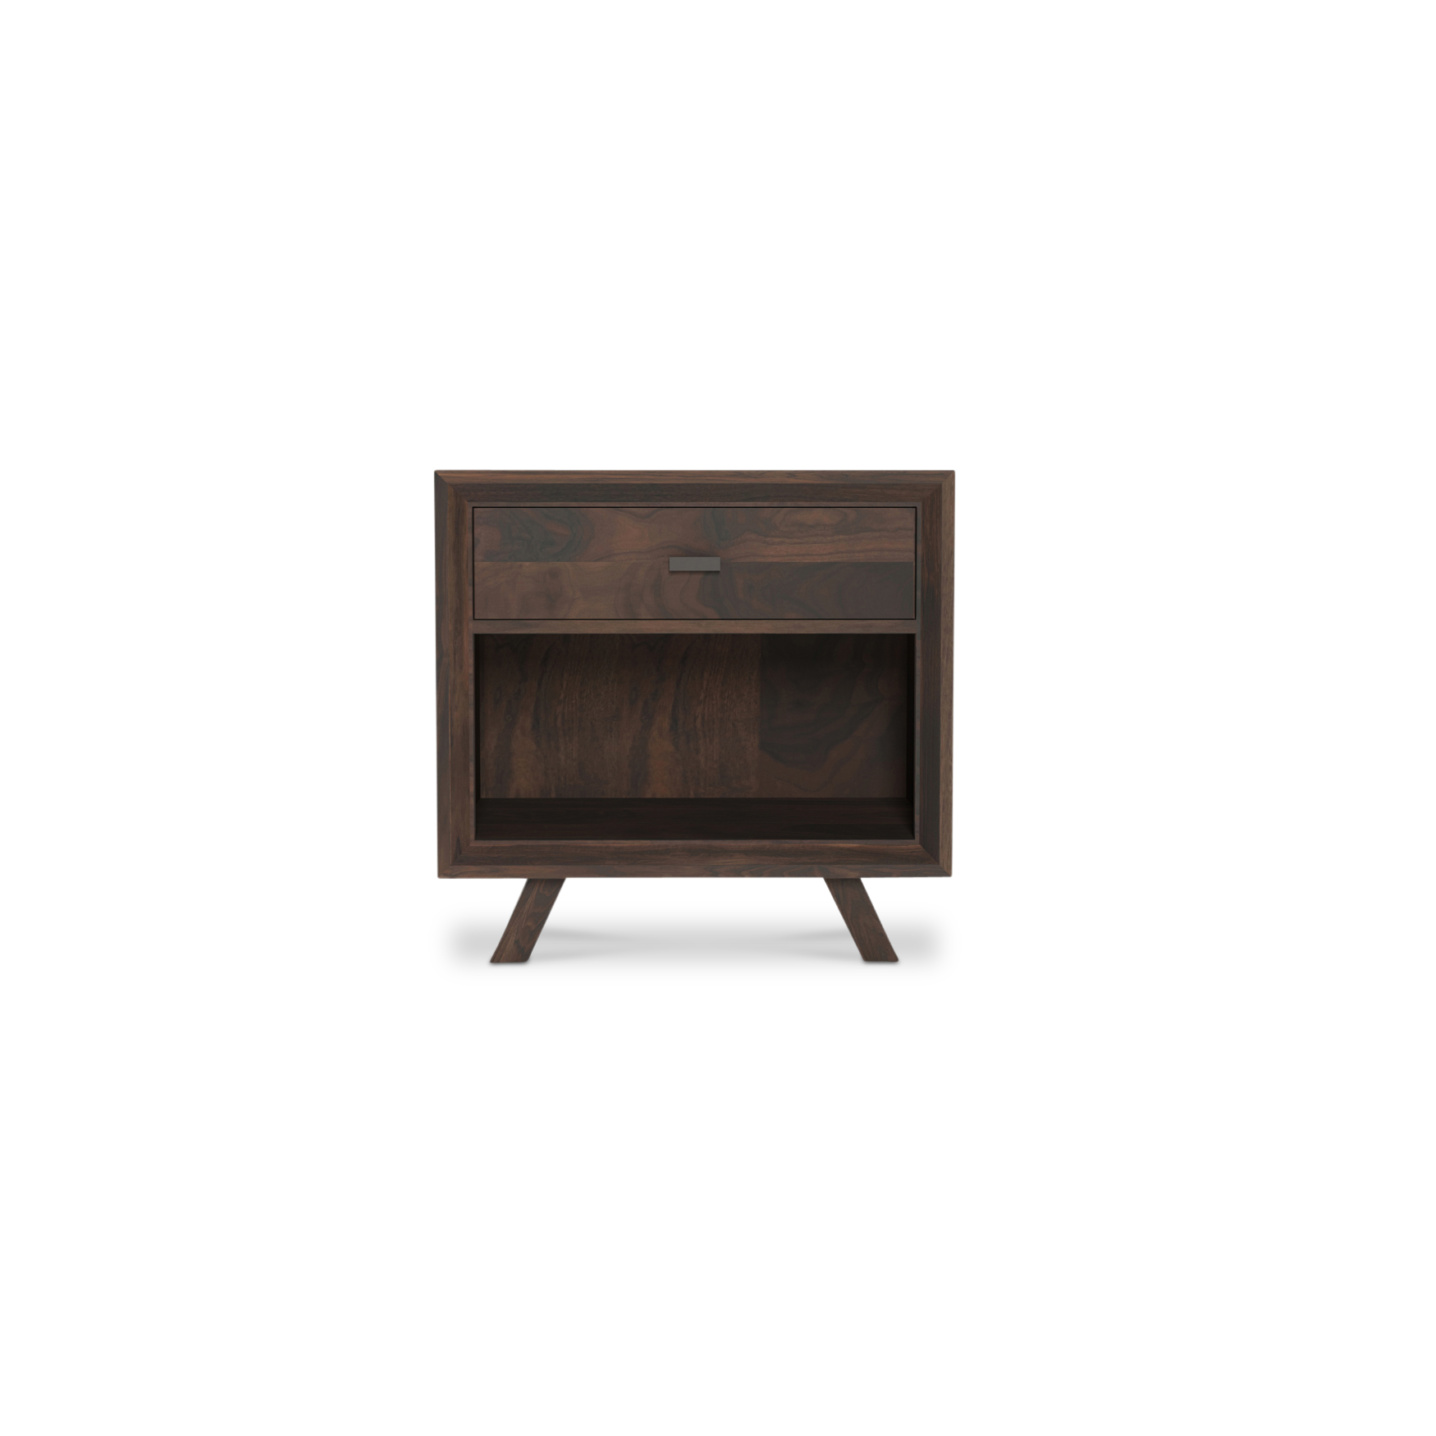 Solid walnut wood Scandinavian nightstand with one drawer